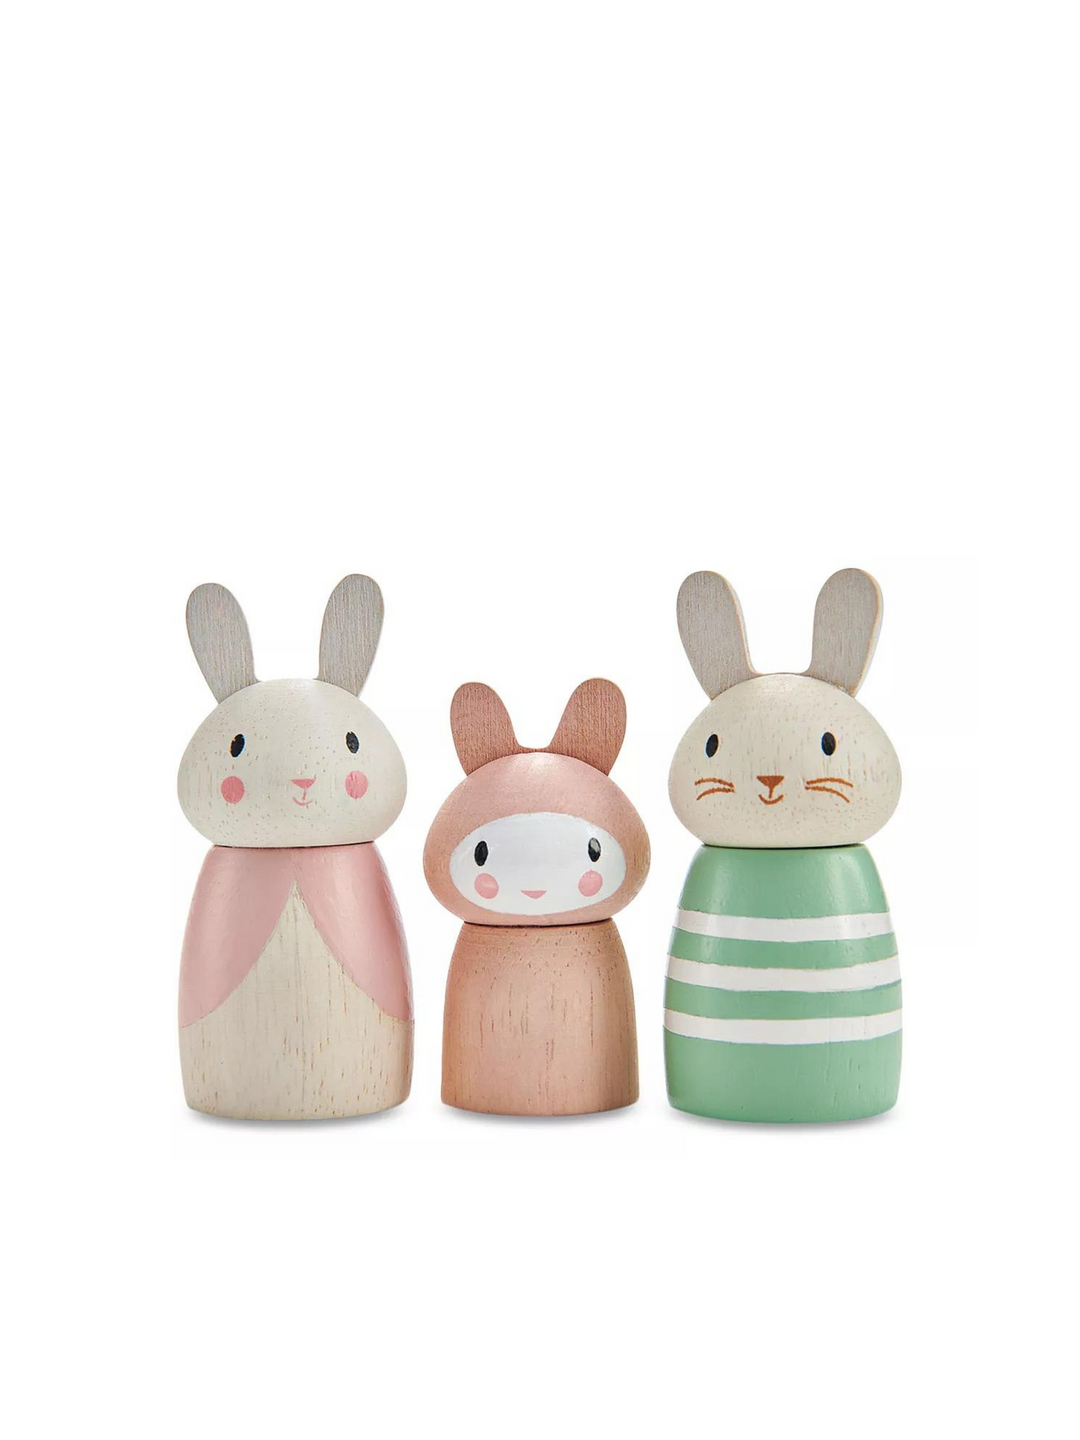 Bunny Tales Wooden Figurines